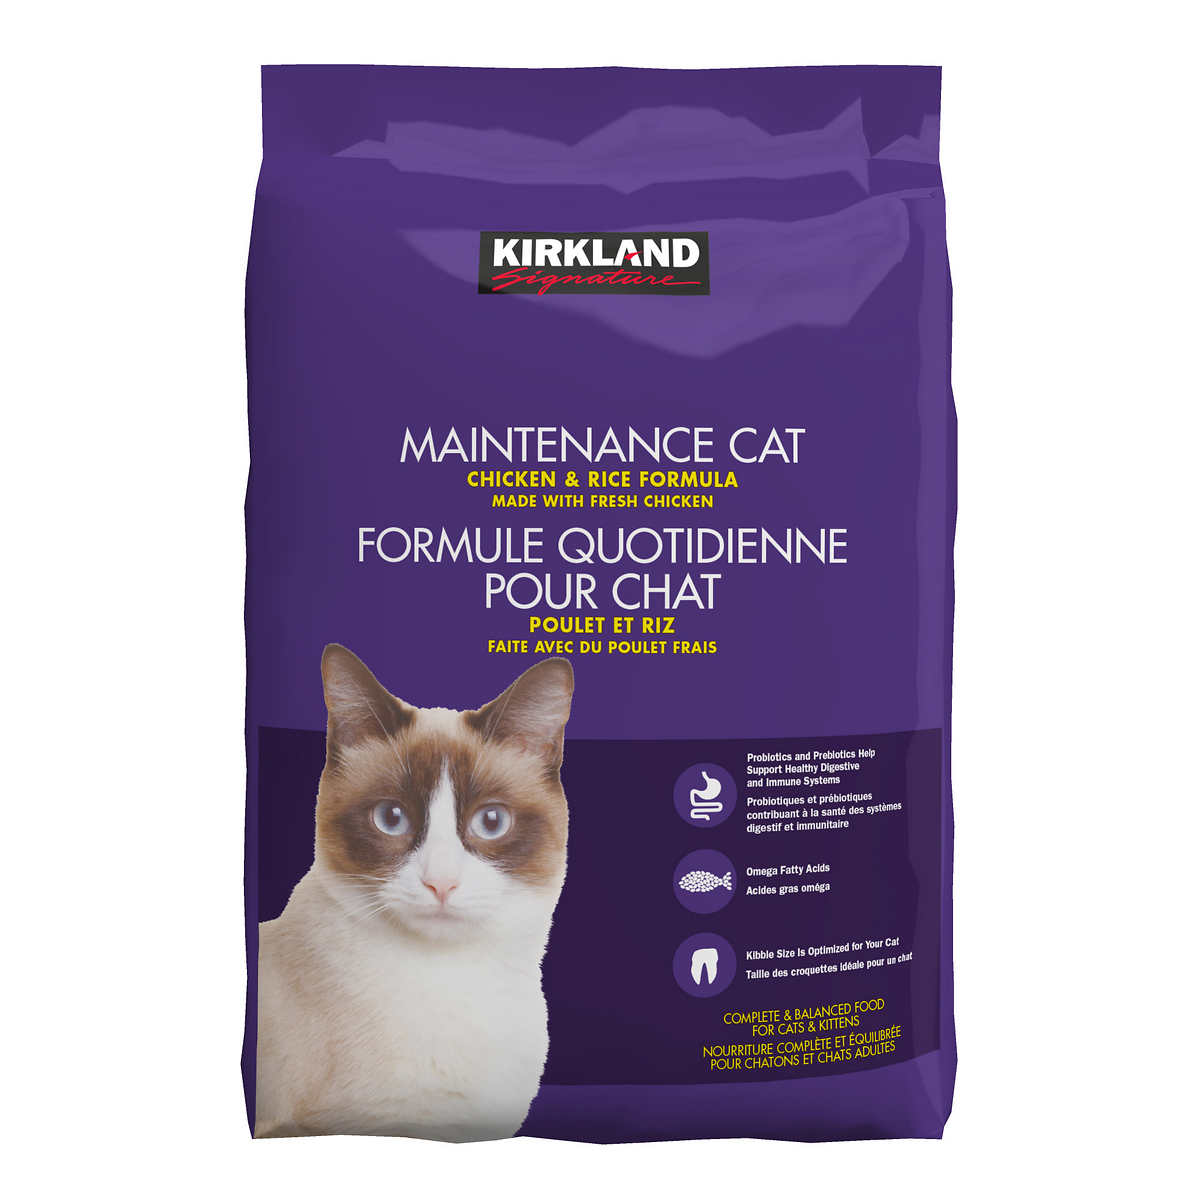 Kirkland Cat Food Nutritional Information | Besto Blog